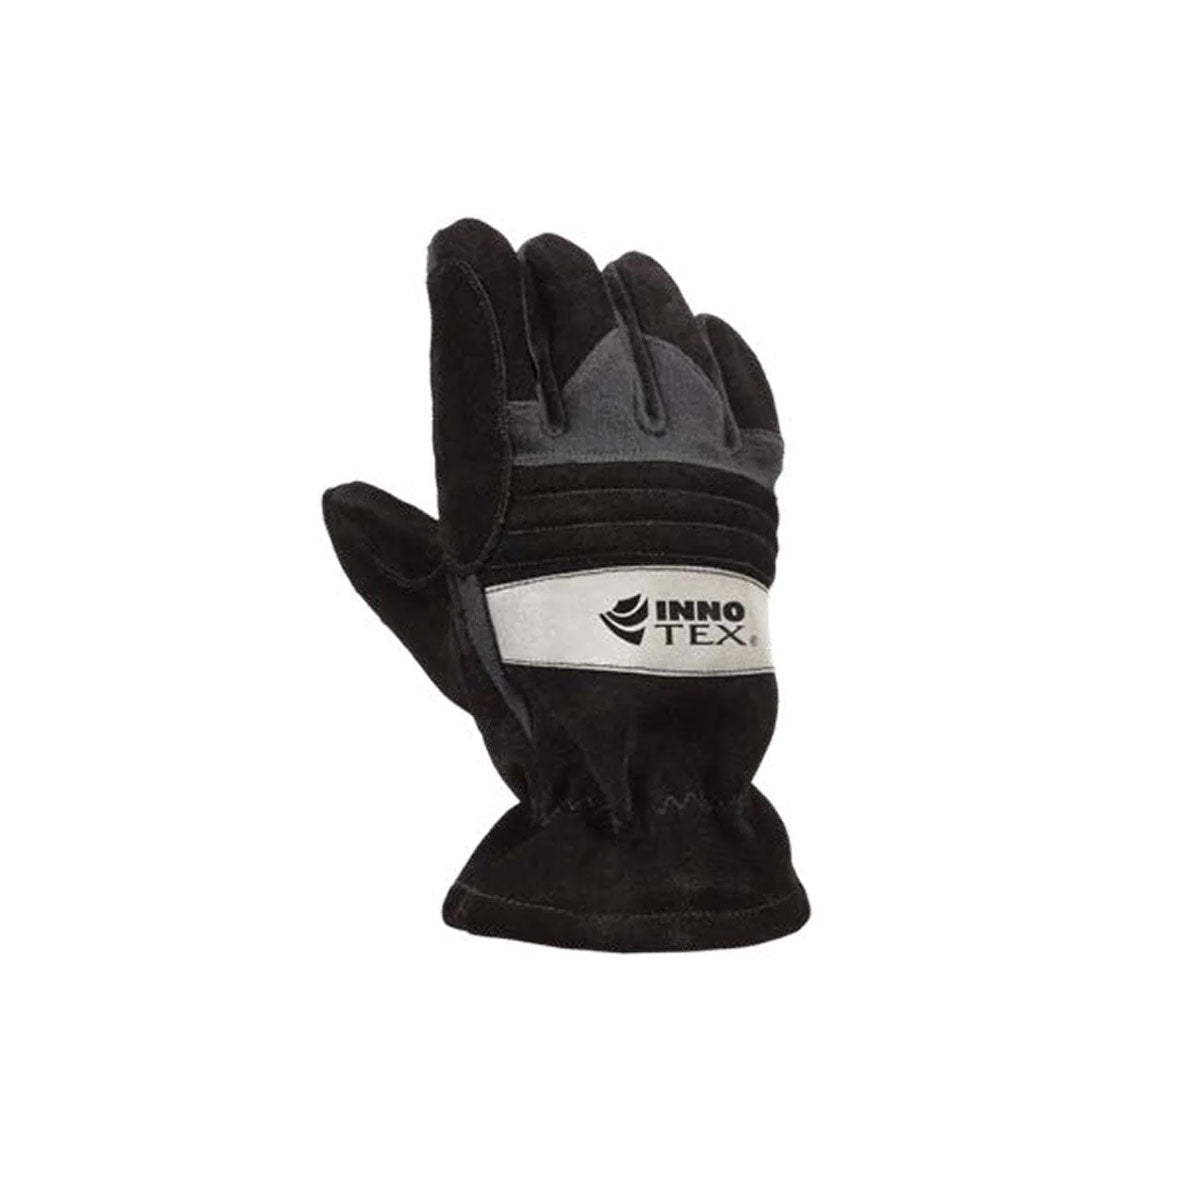 Glove Firefighting Vesatamx Black Eversoft Split Cowhide Shell and Kevlar Knit Knuckle Padding Nomex Gauntlet Size X-Large